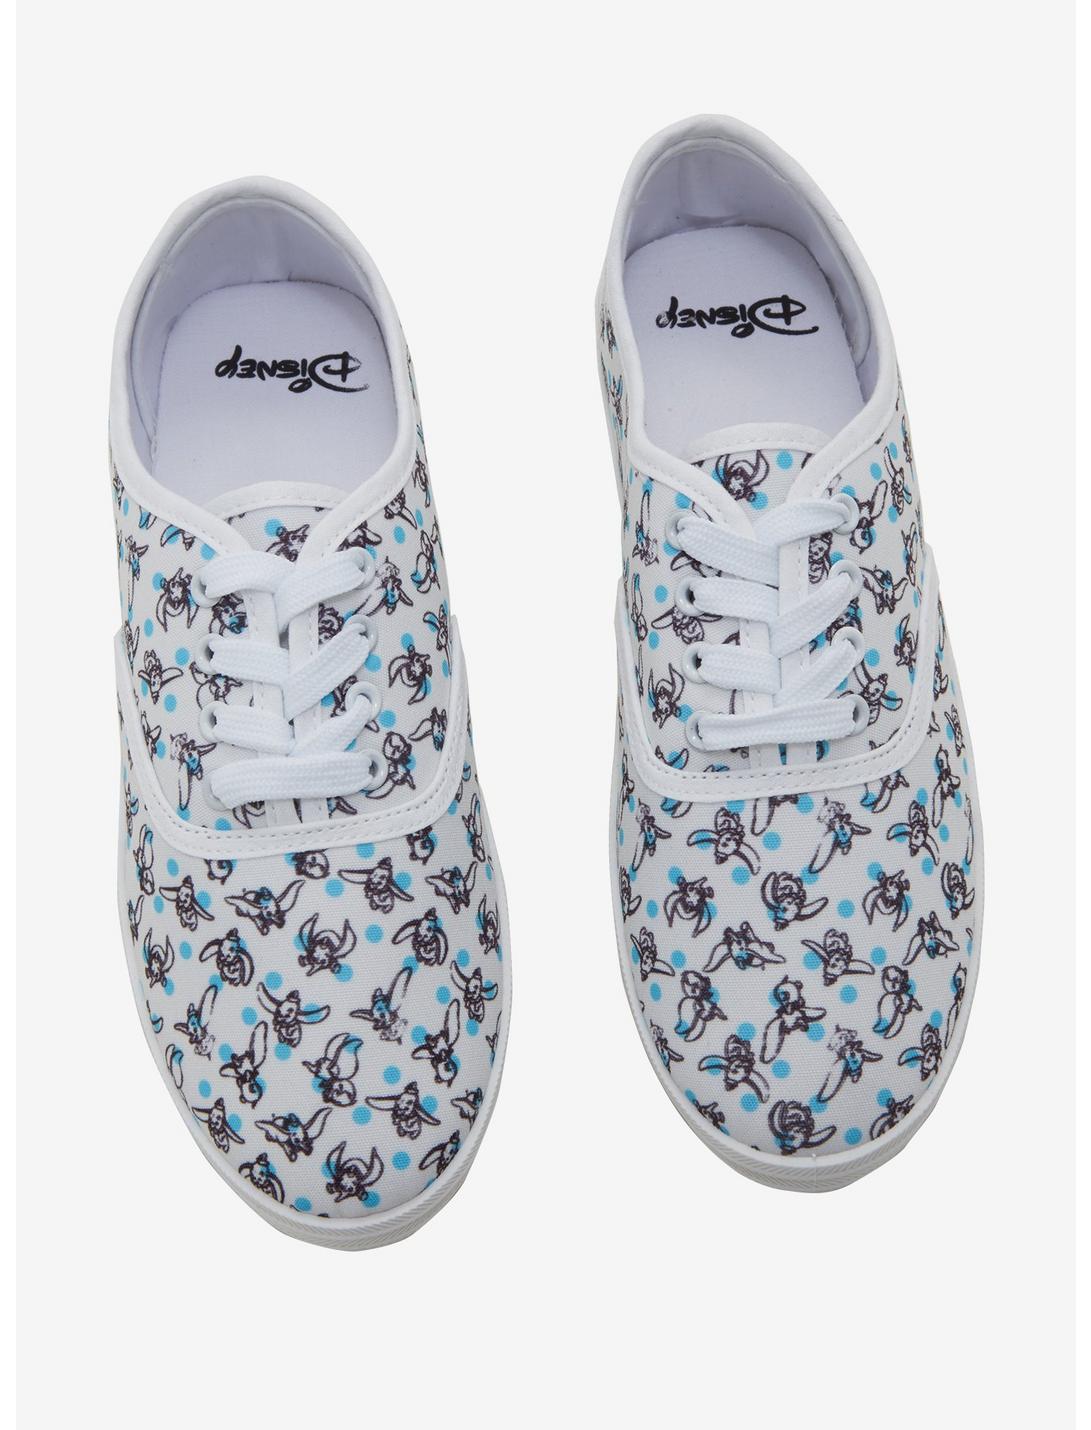 Disney Dumbo Lace-Up Sneakers, MULTI, hi-res